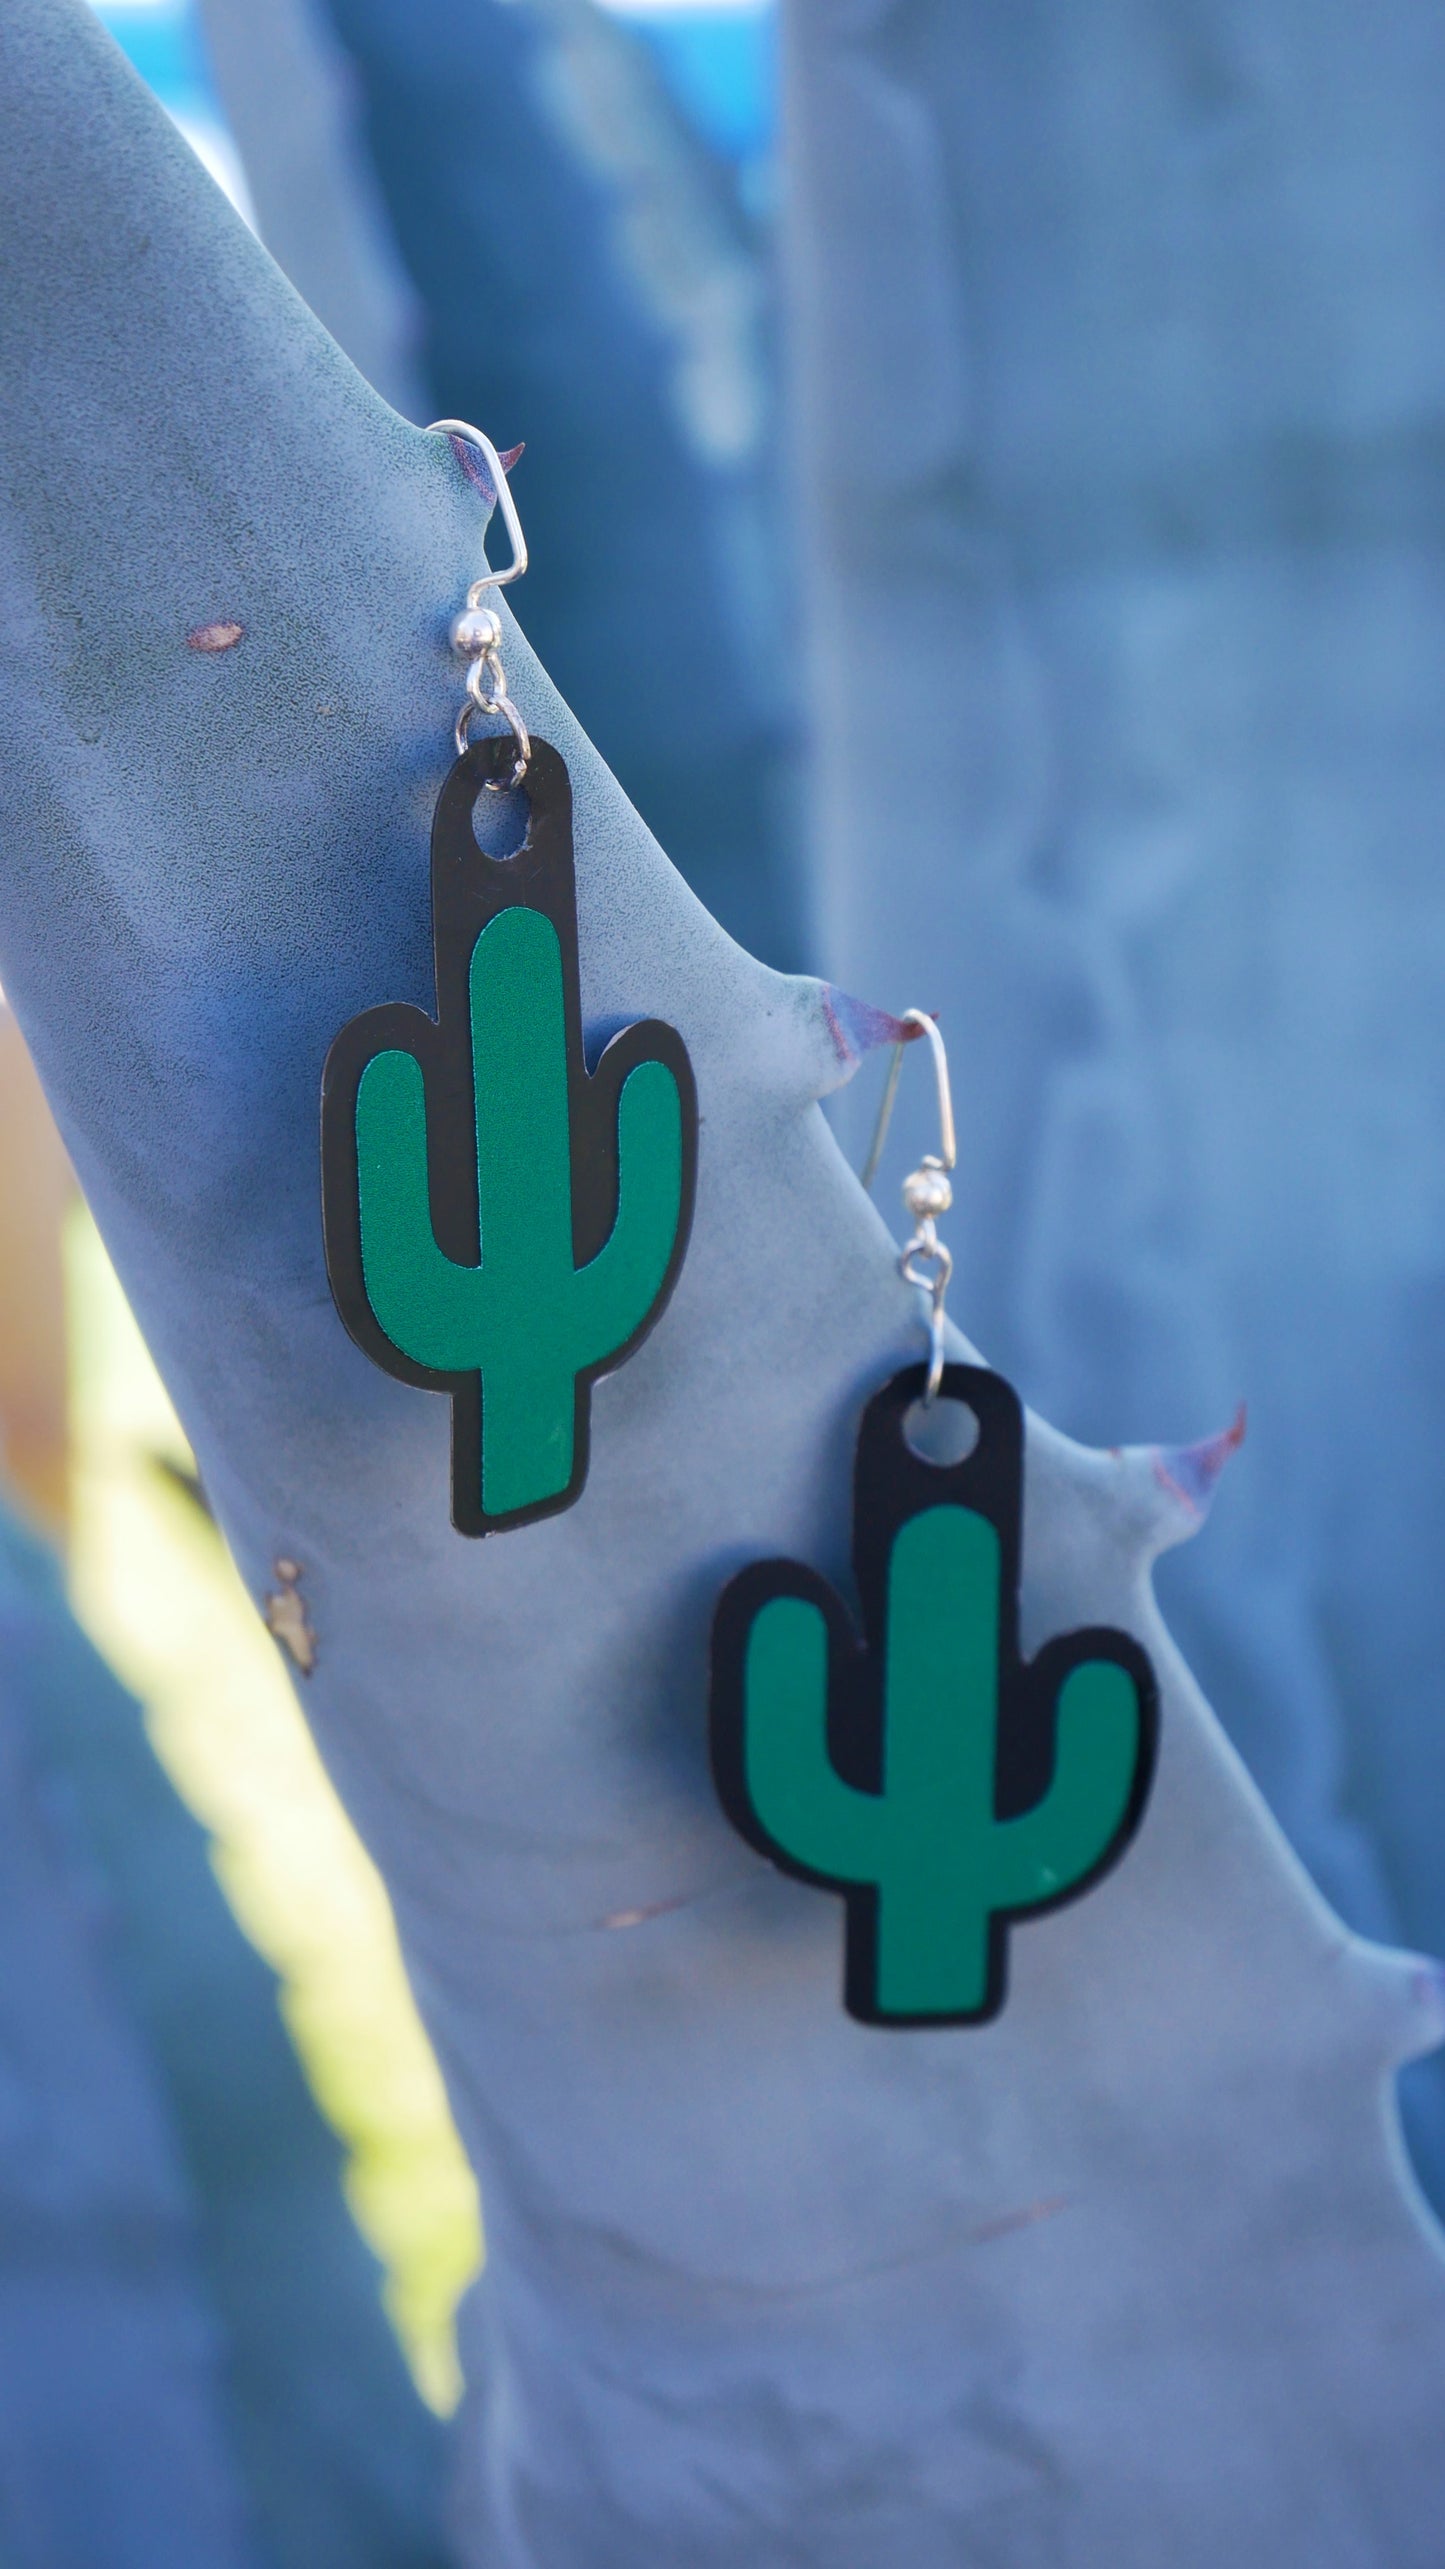 Reflective Cactus Earrings